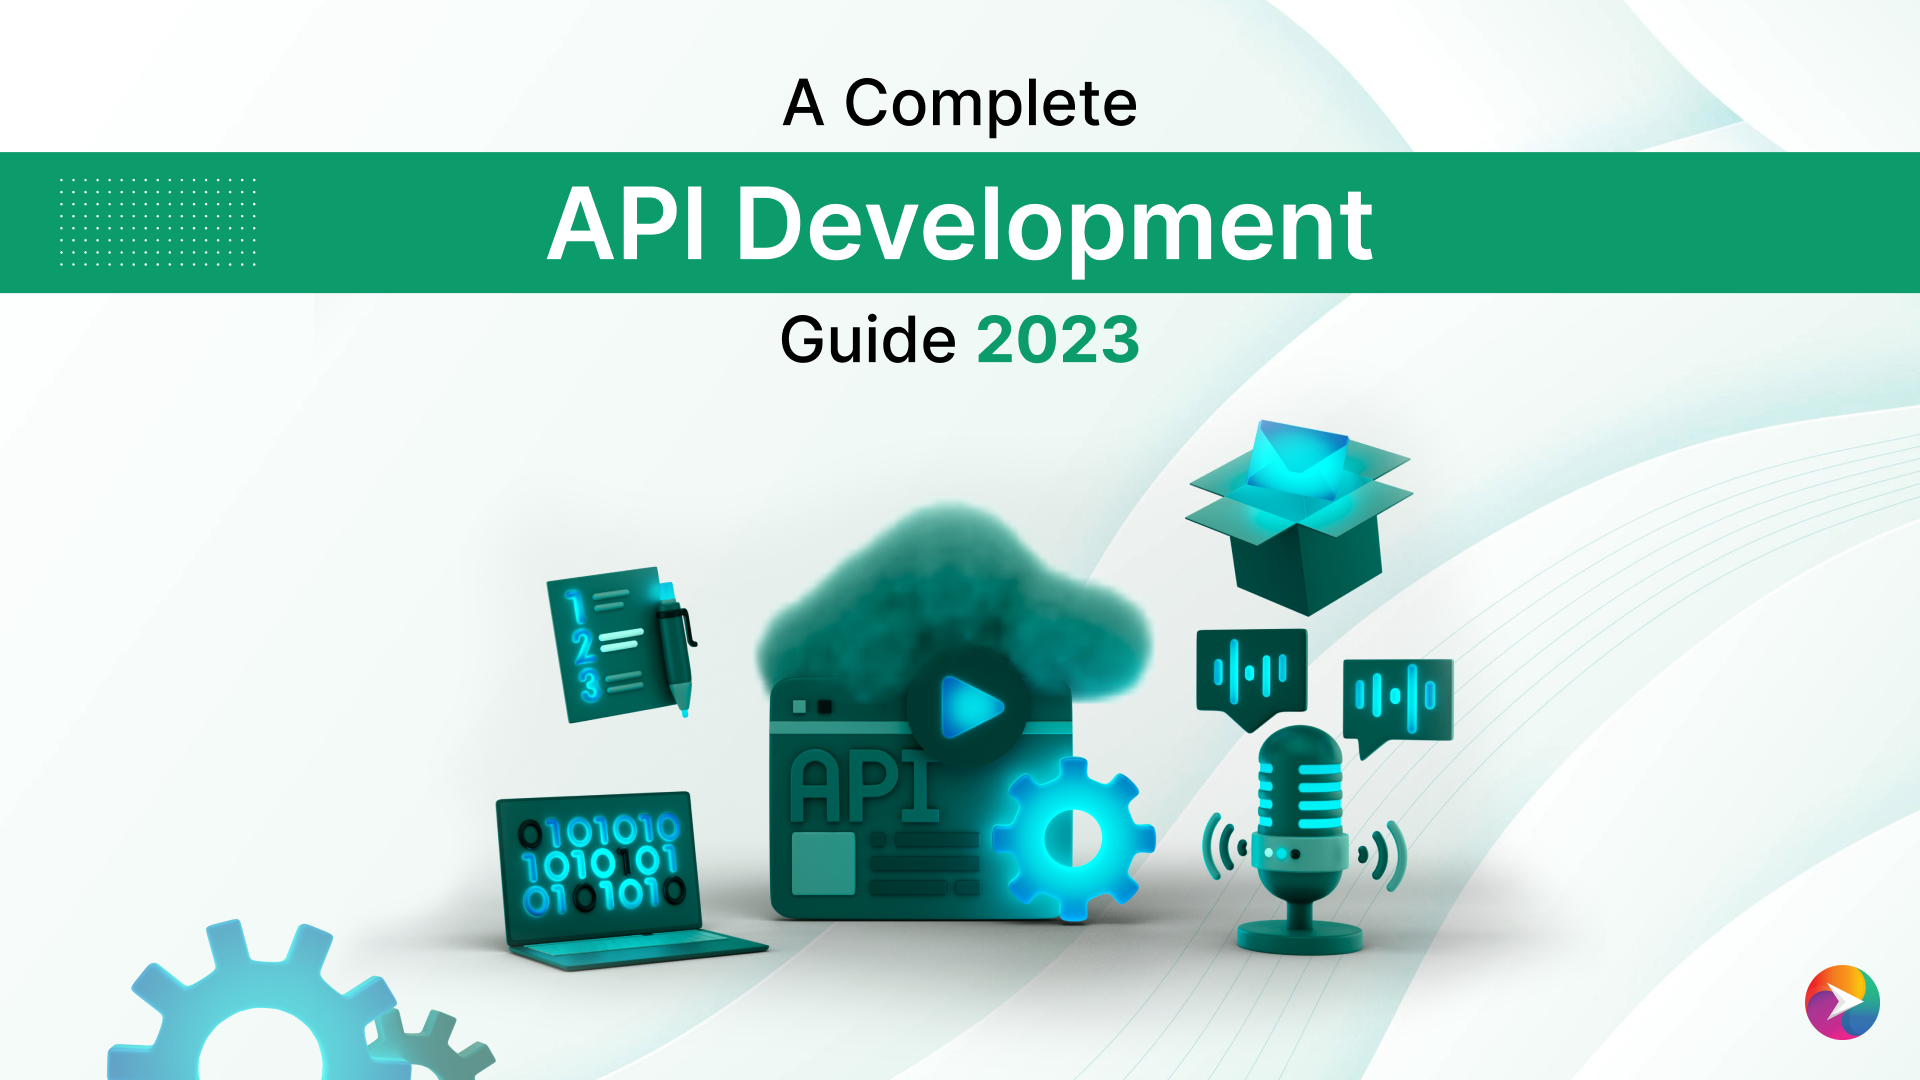 A Complete API Development Guide 2023